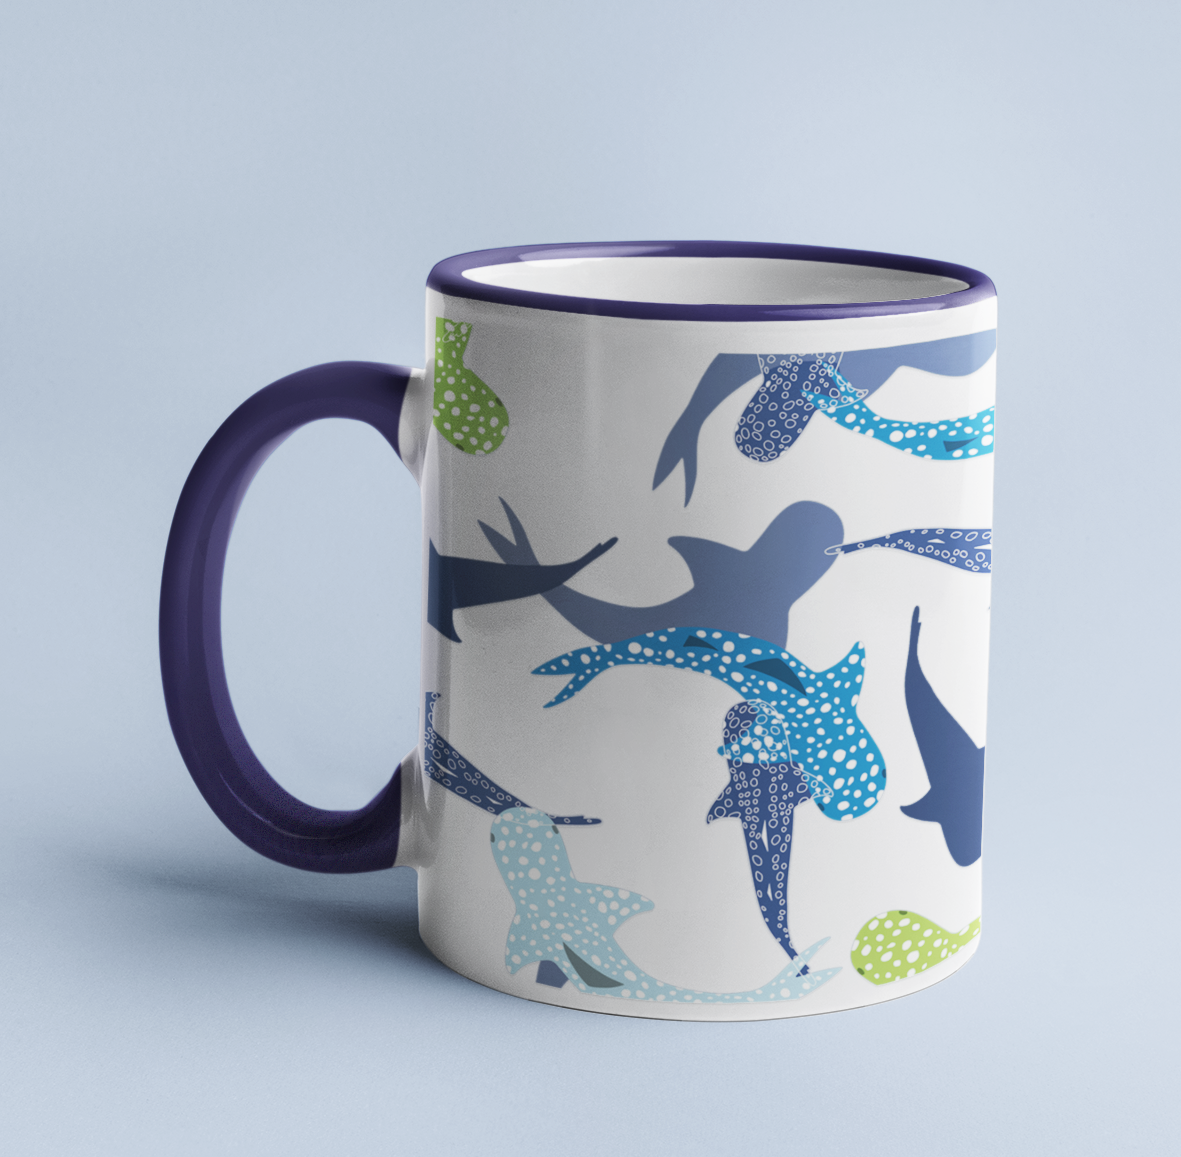 Reef Sharks Design mug on a light blue background, with a dark blue handle and rim.